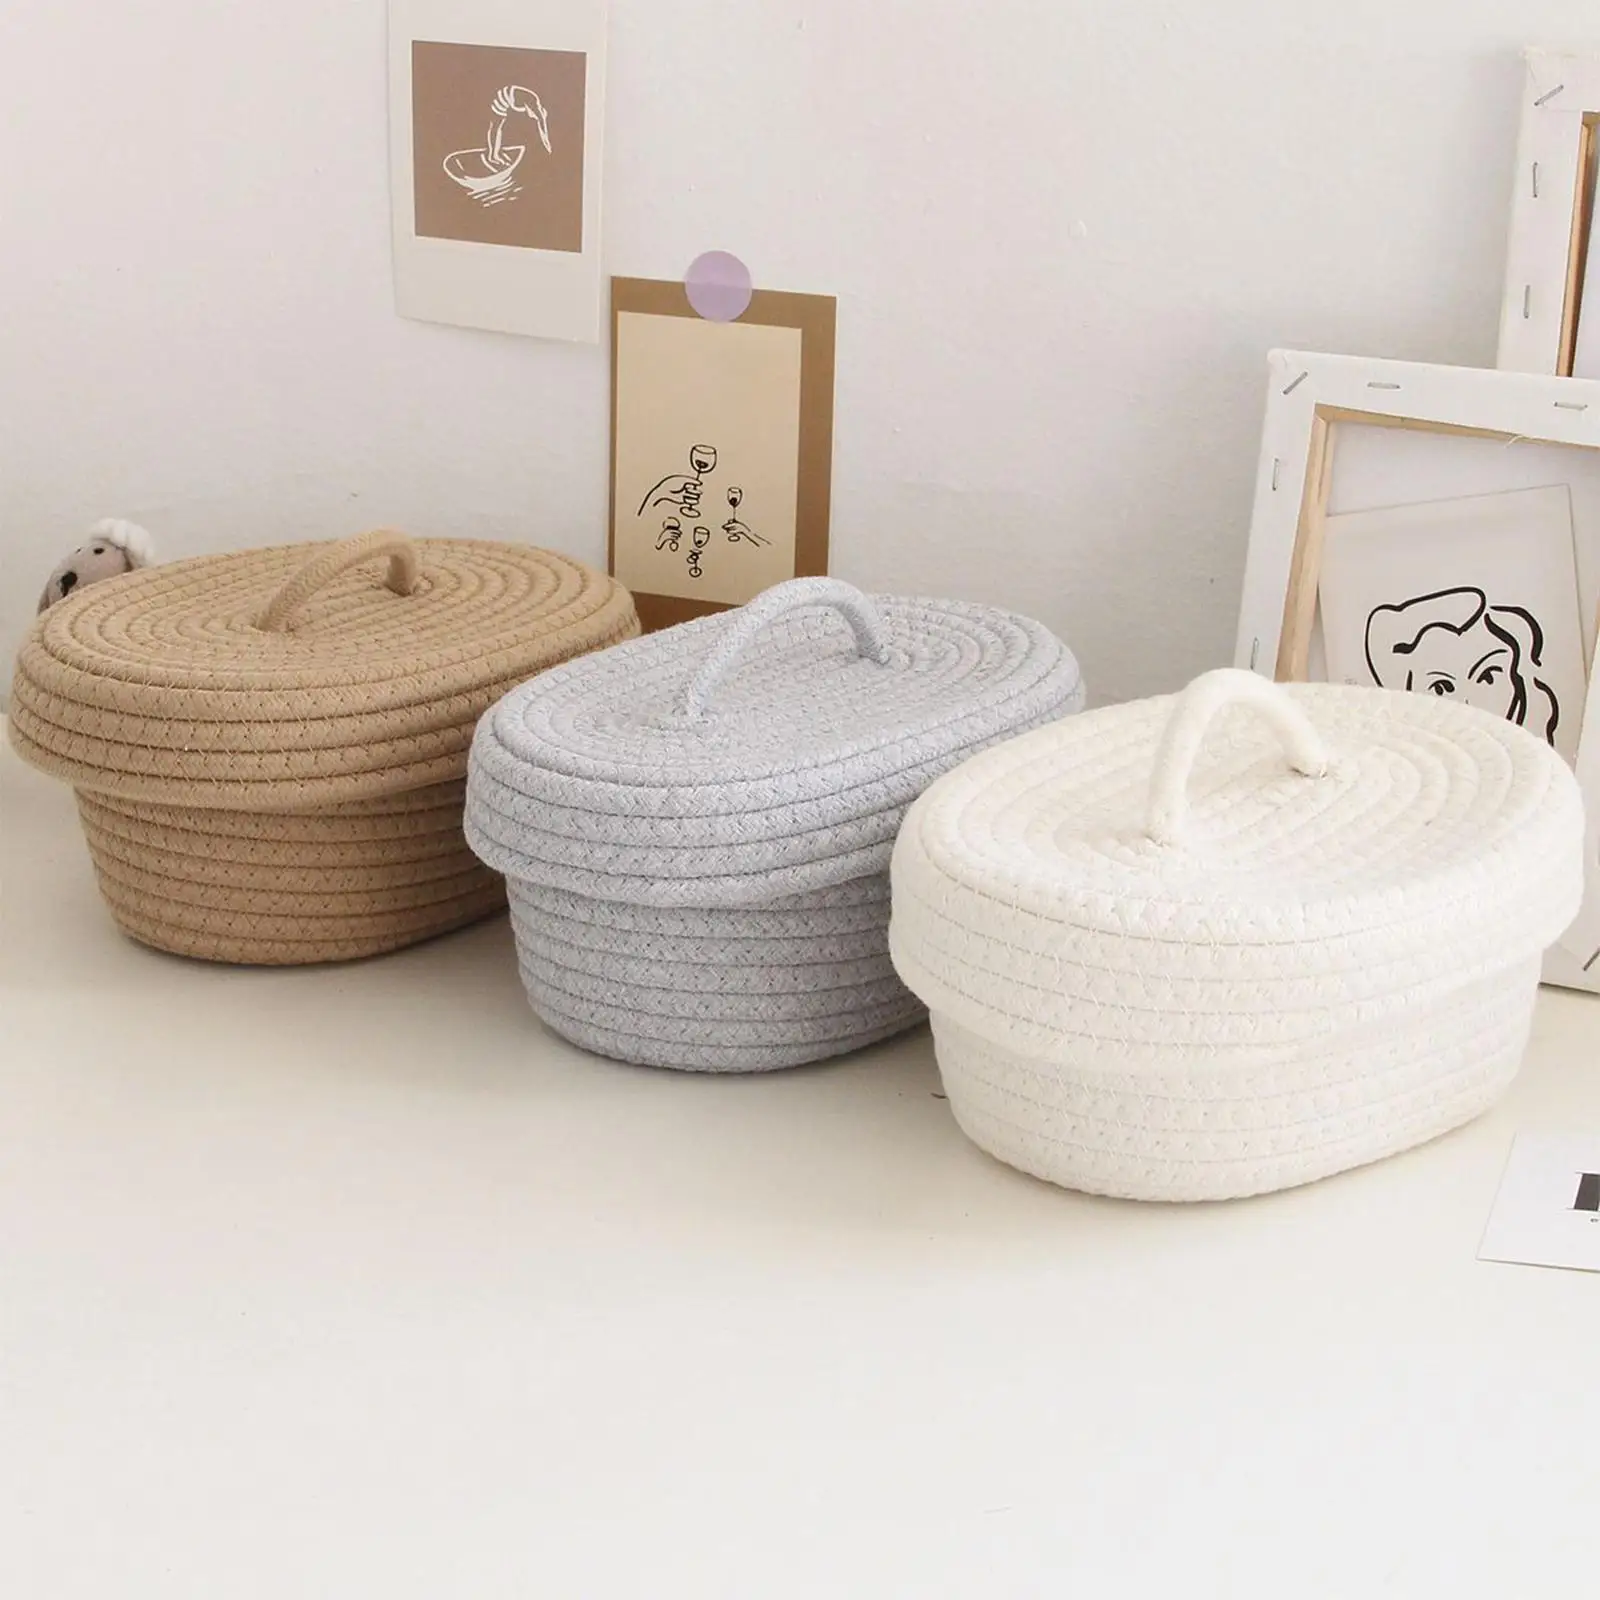 Woven Rope Basket Living Room Basket Container Shelf Basket Oval Desktop Organizer for Sundries Pet Products Books Makeup Fruits